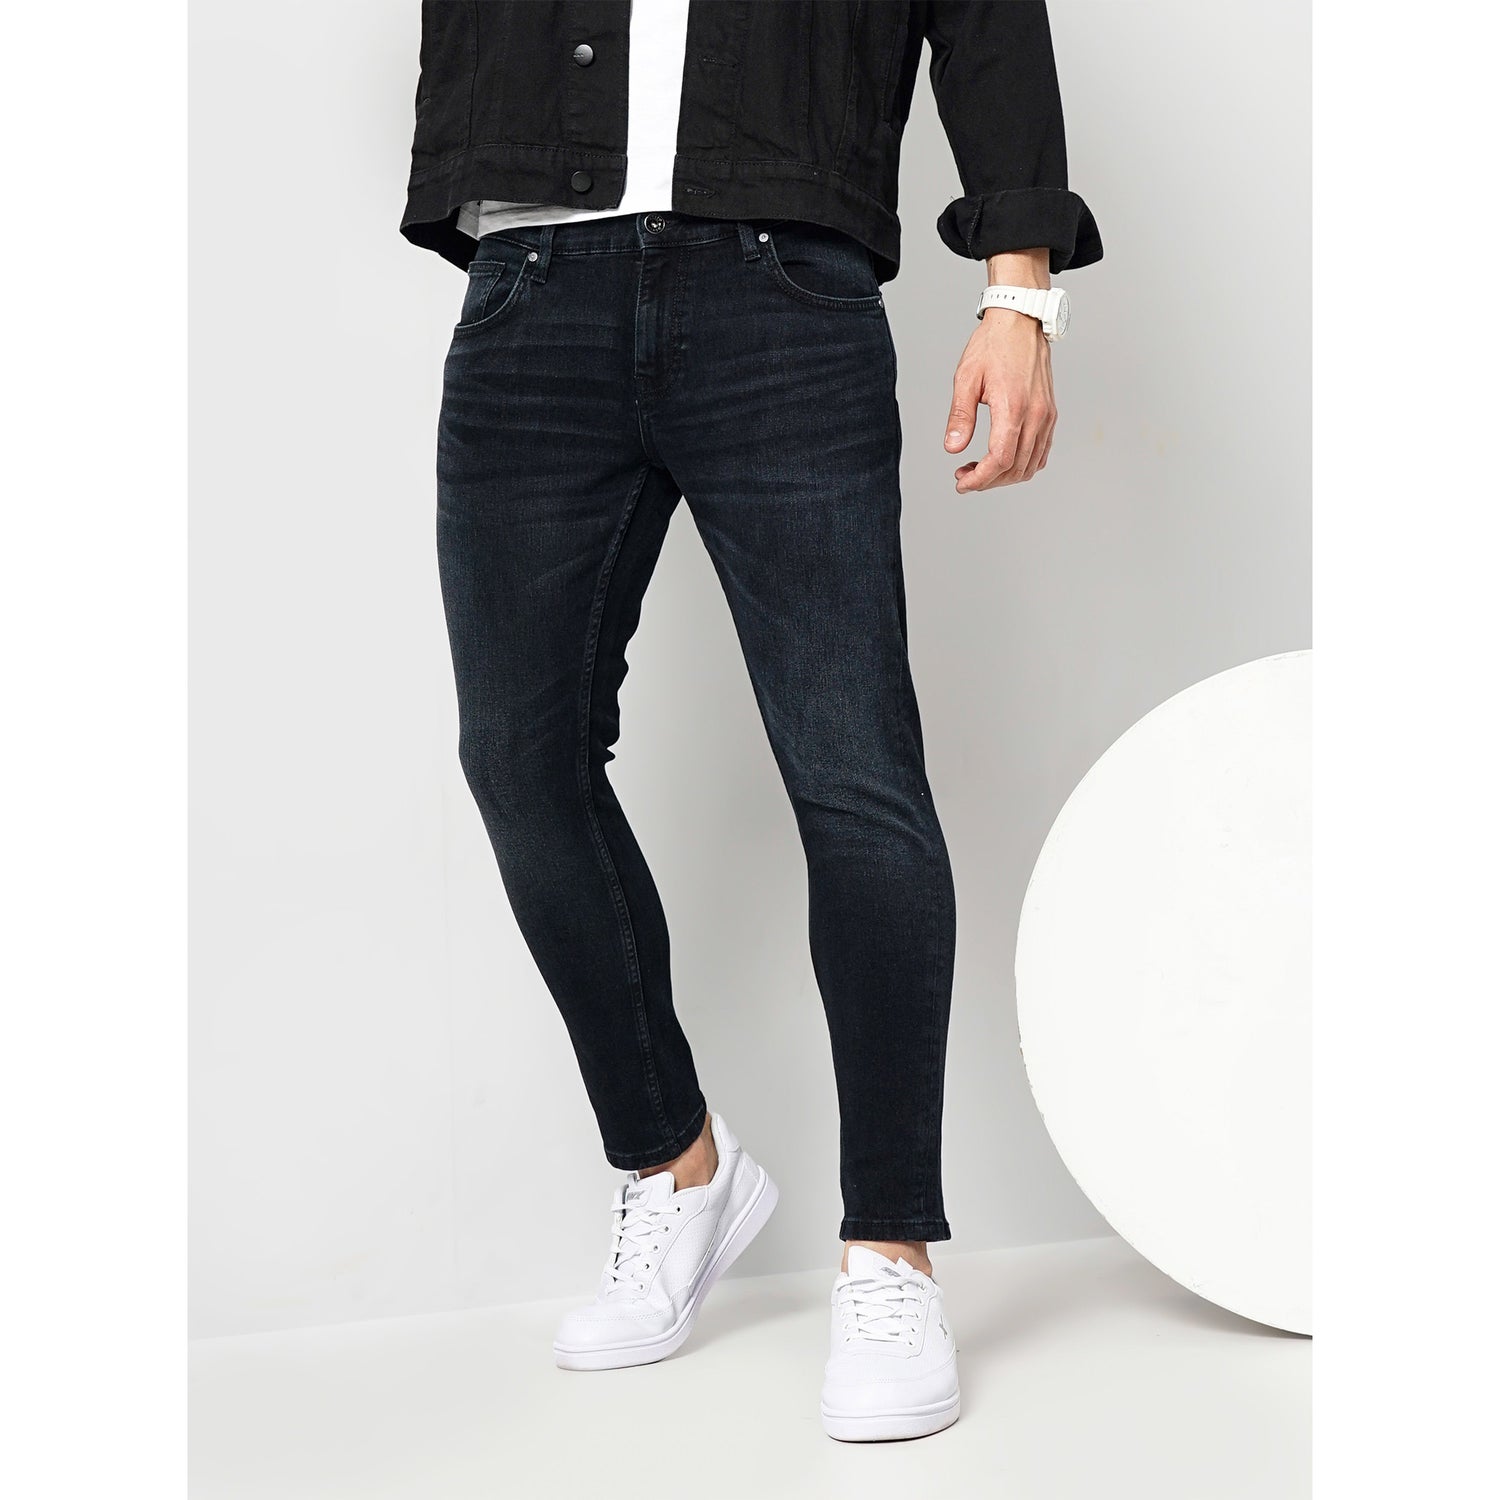 Solid Black Cotton-Lycra-Blend Jeans (FOANKLE8)